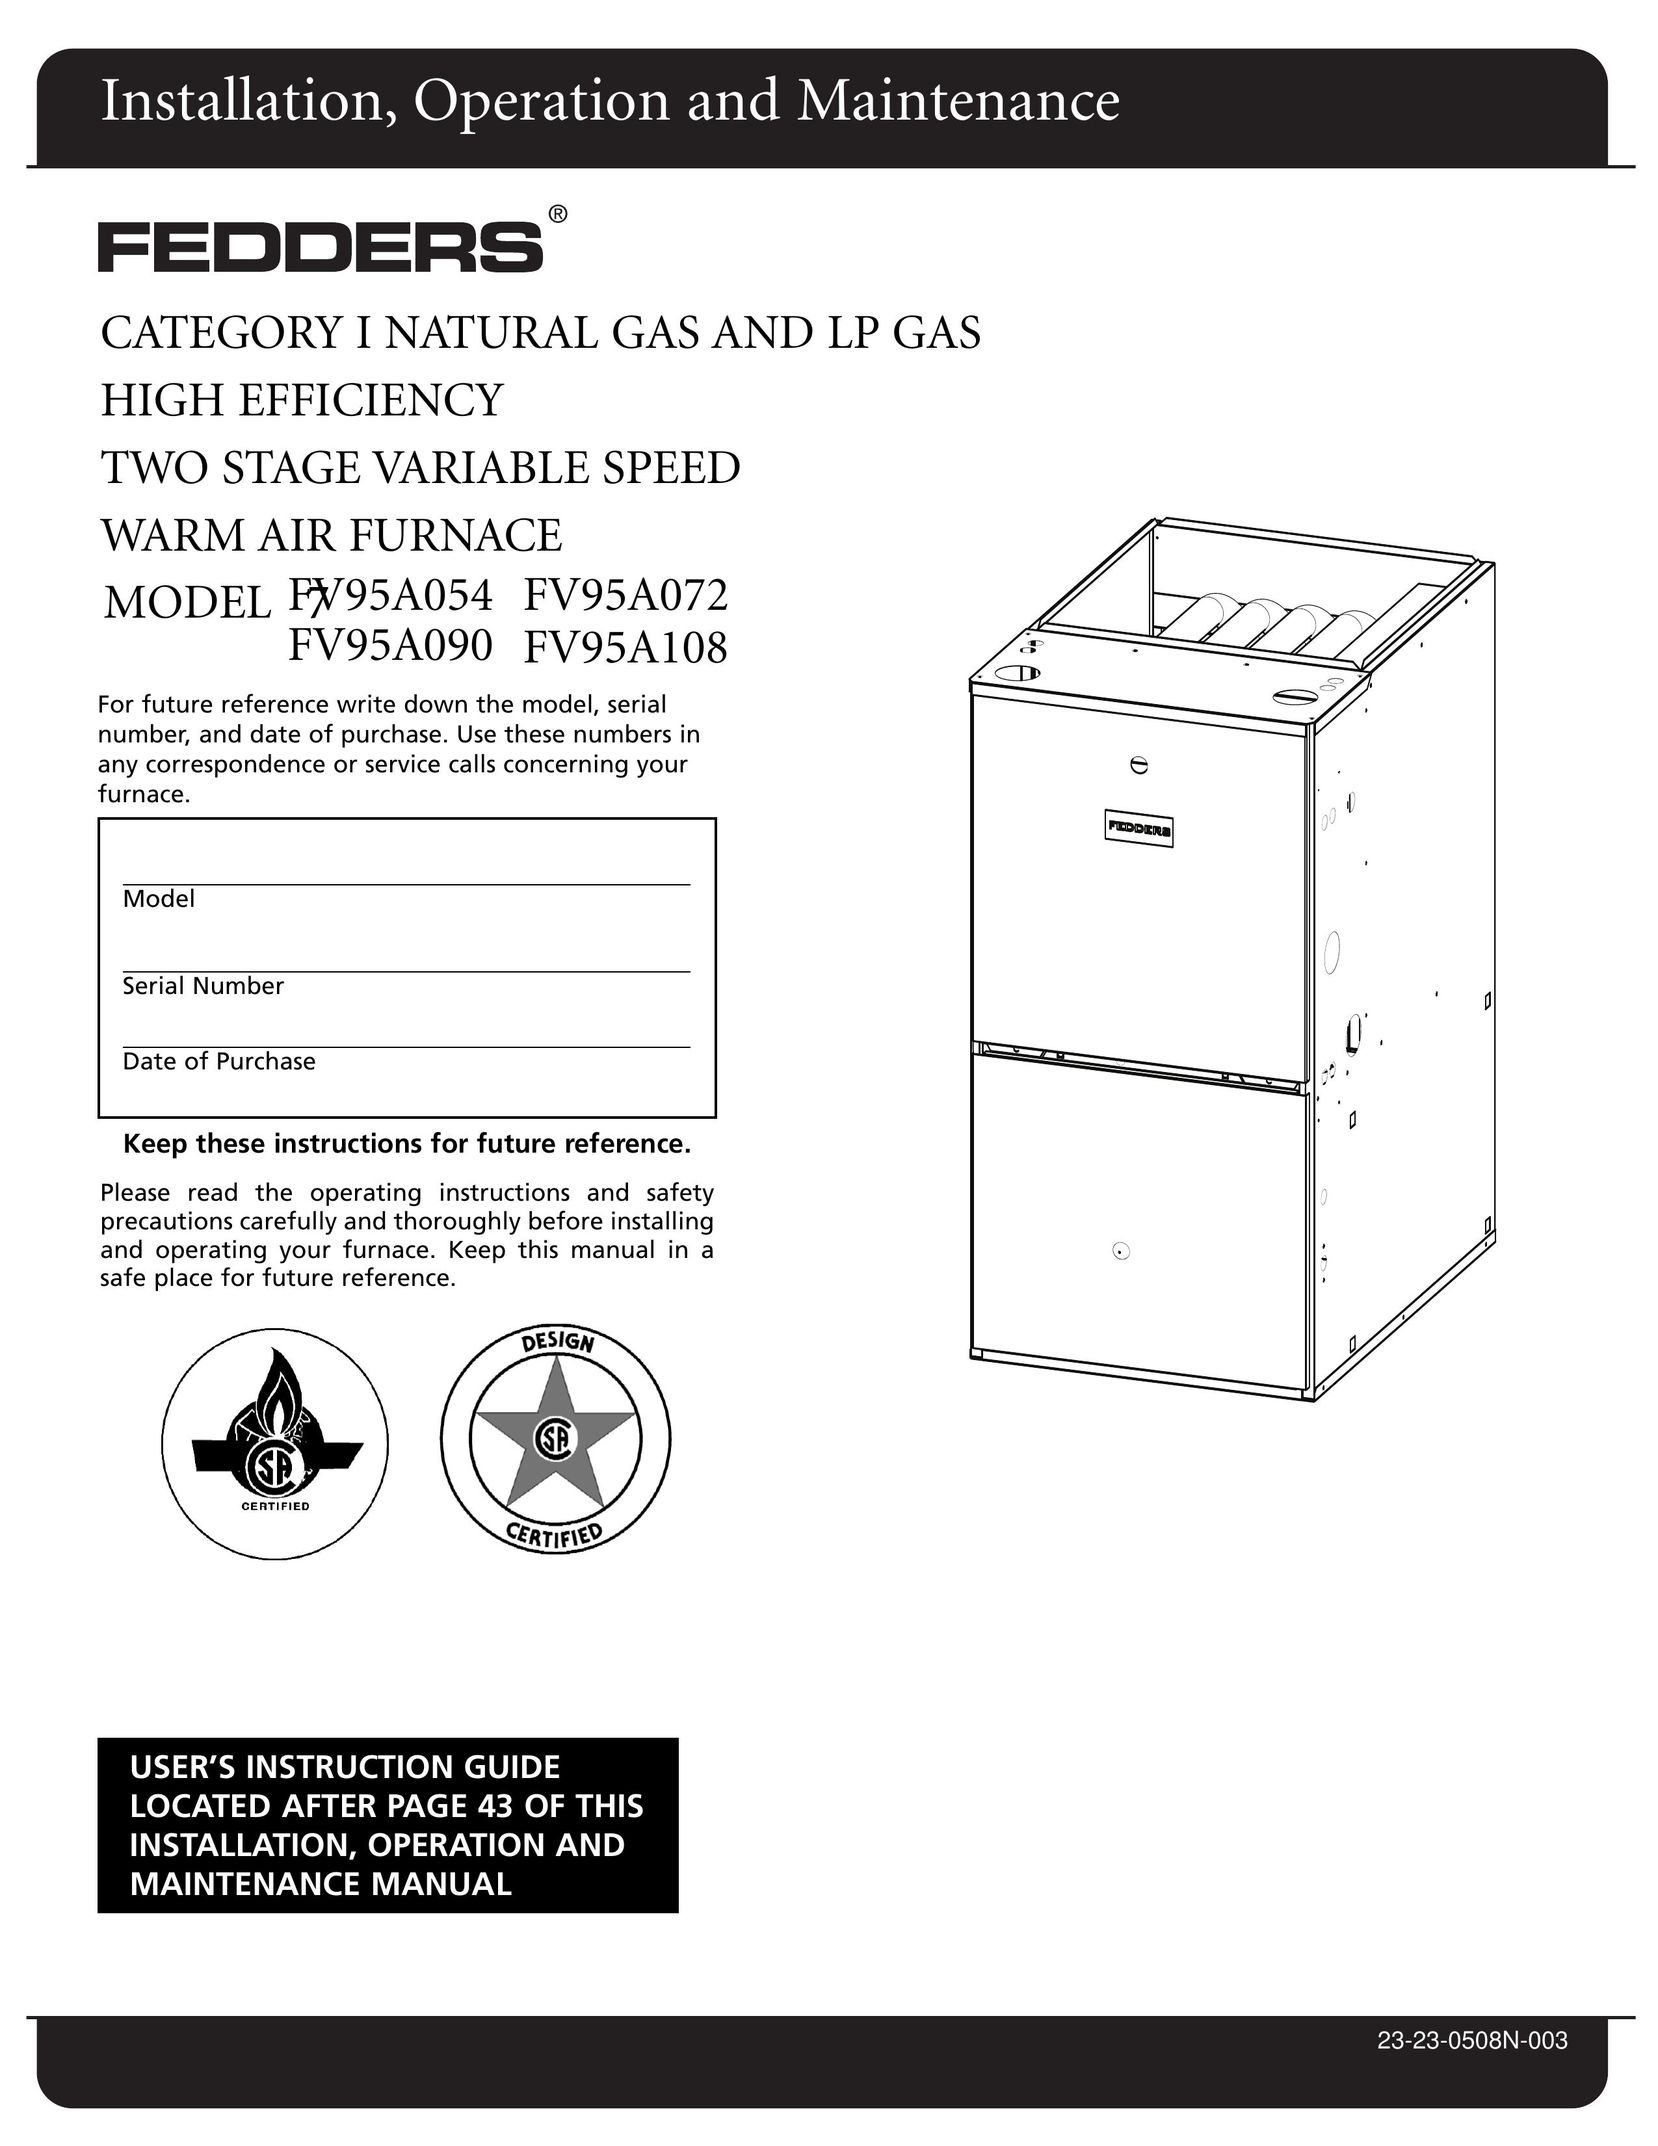 Fedders FV95A072 Freezer User Manual